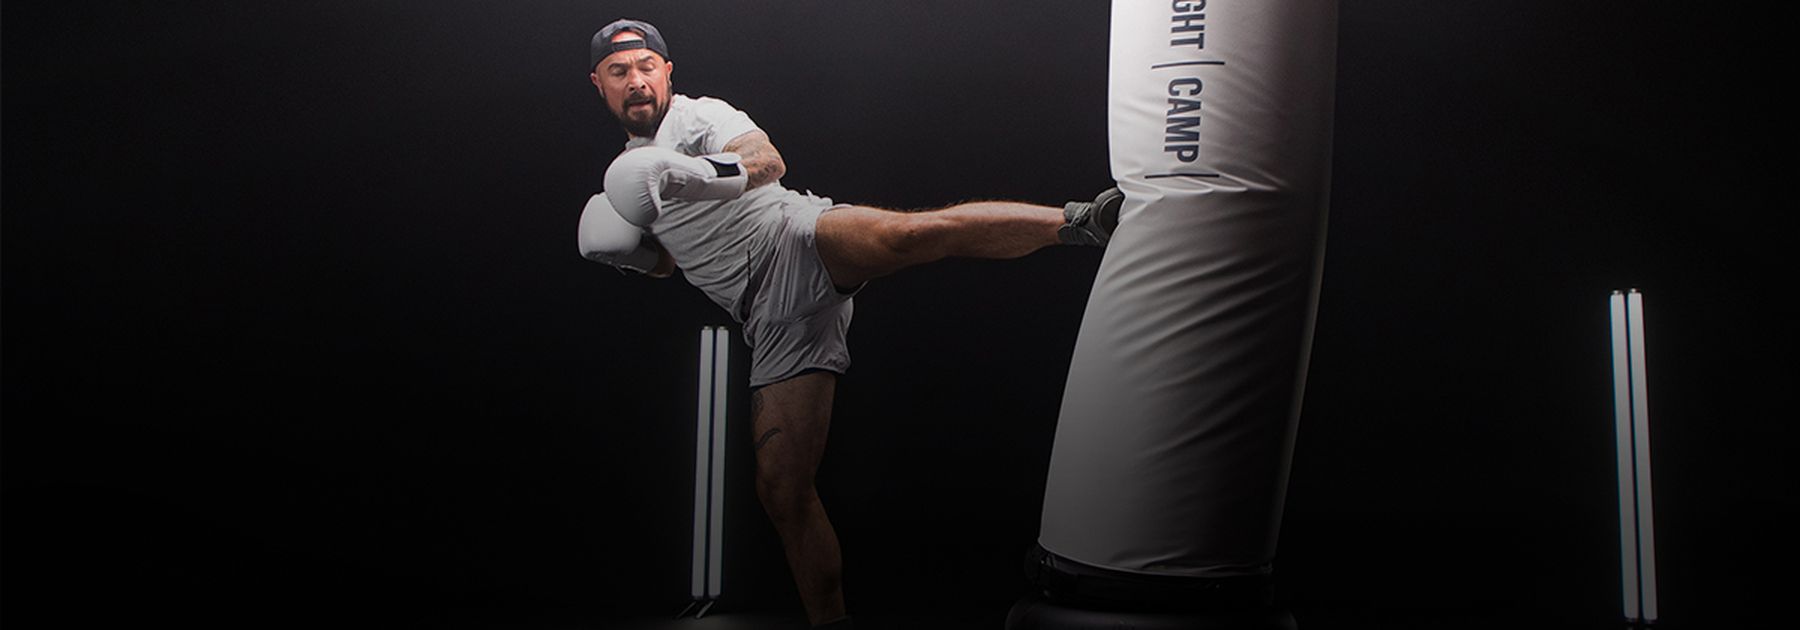 FightCamp Kickboxing Techniques